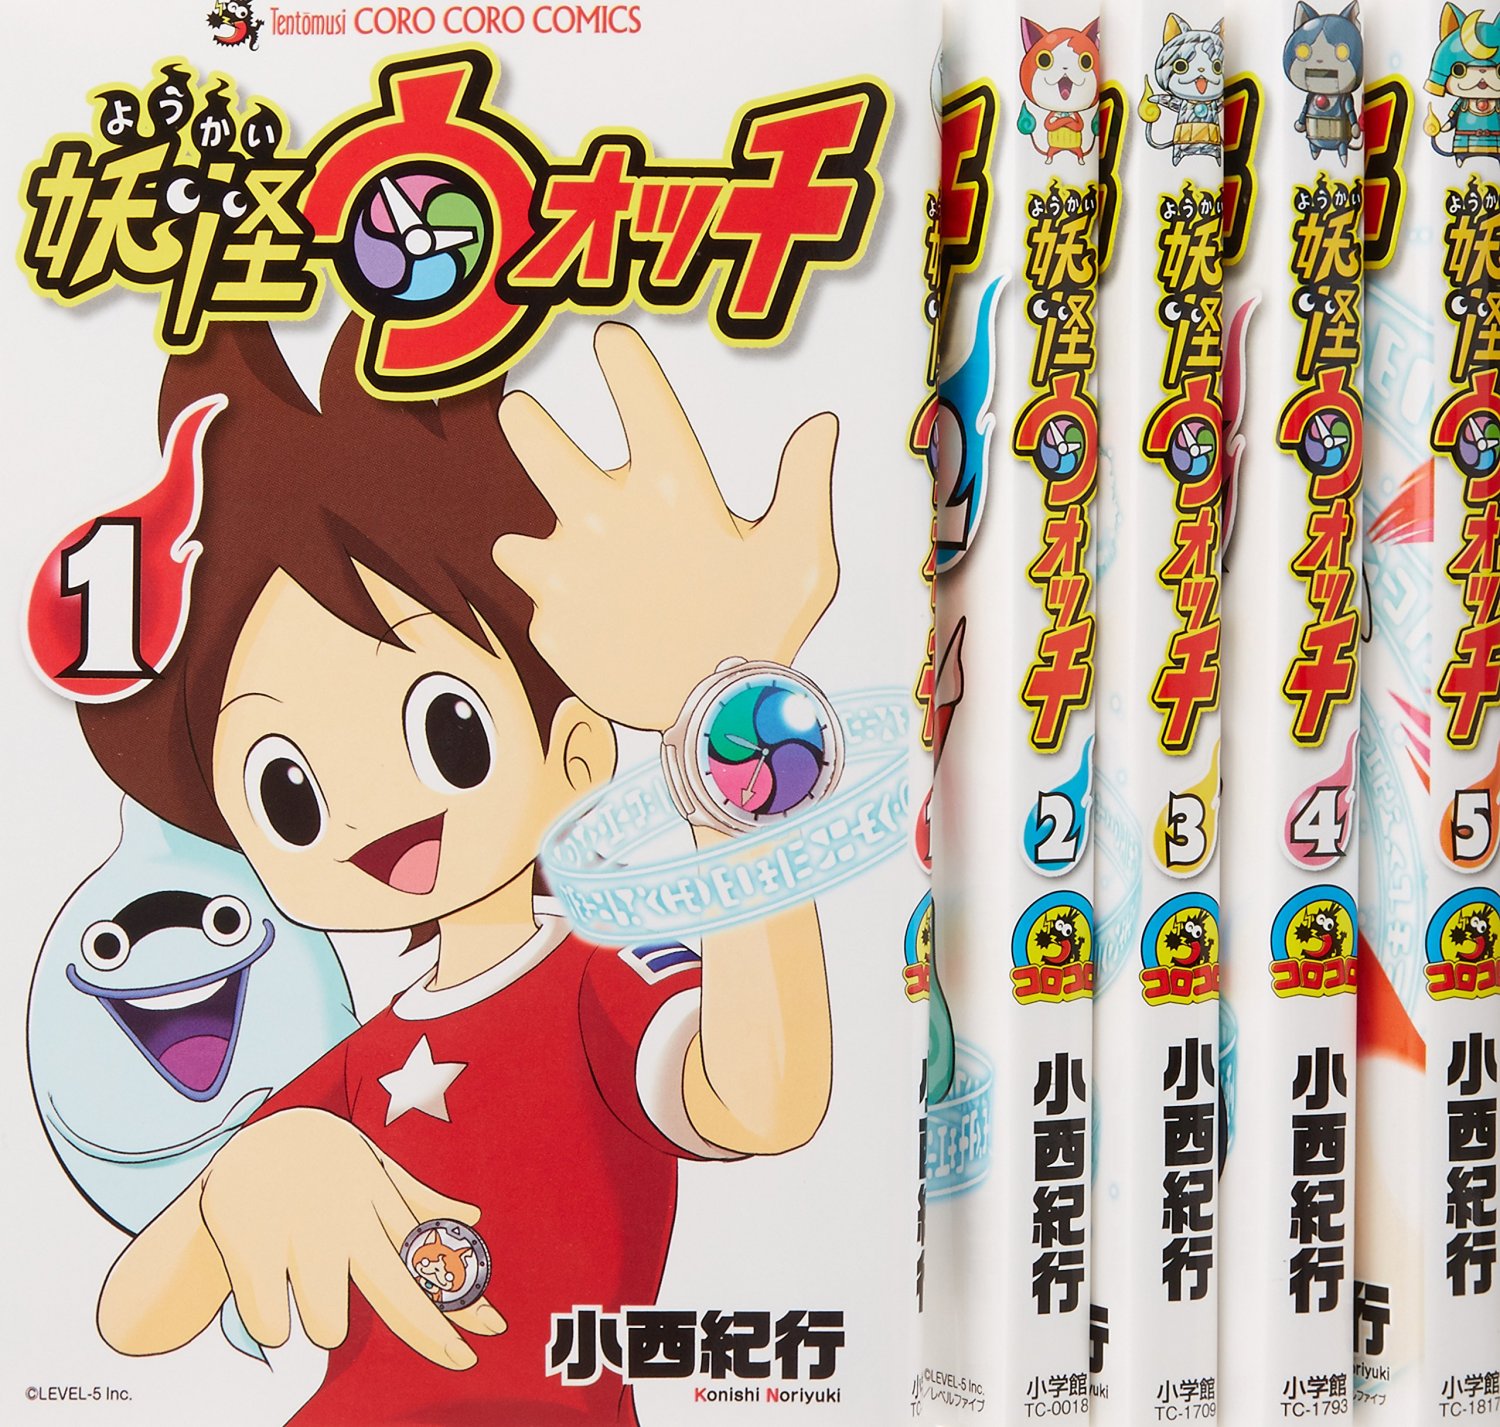 Yo-kai Watch Volume 4 : Konishi, Noriyuki, Konishi, Noriyuki